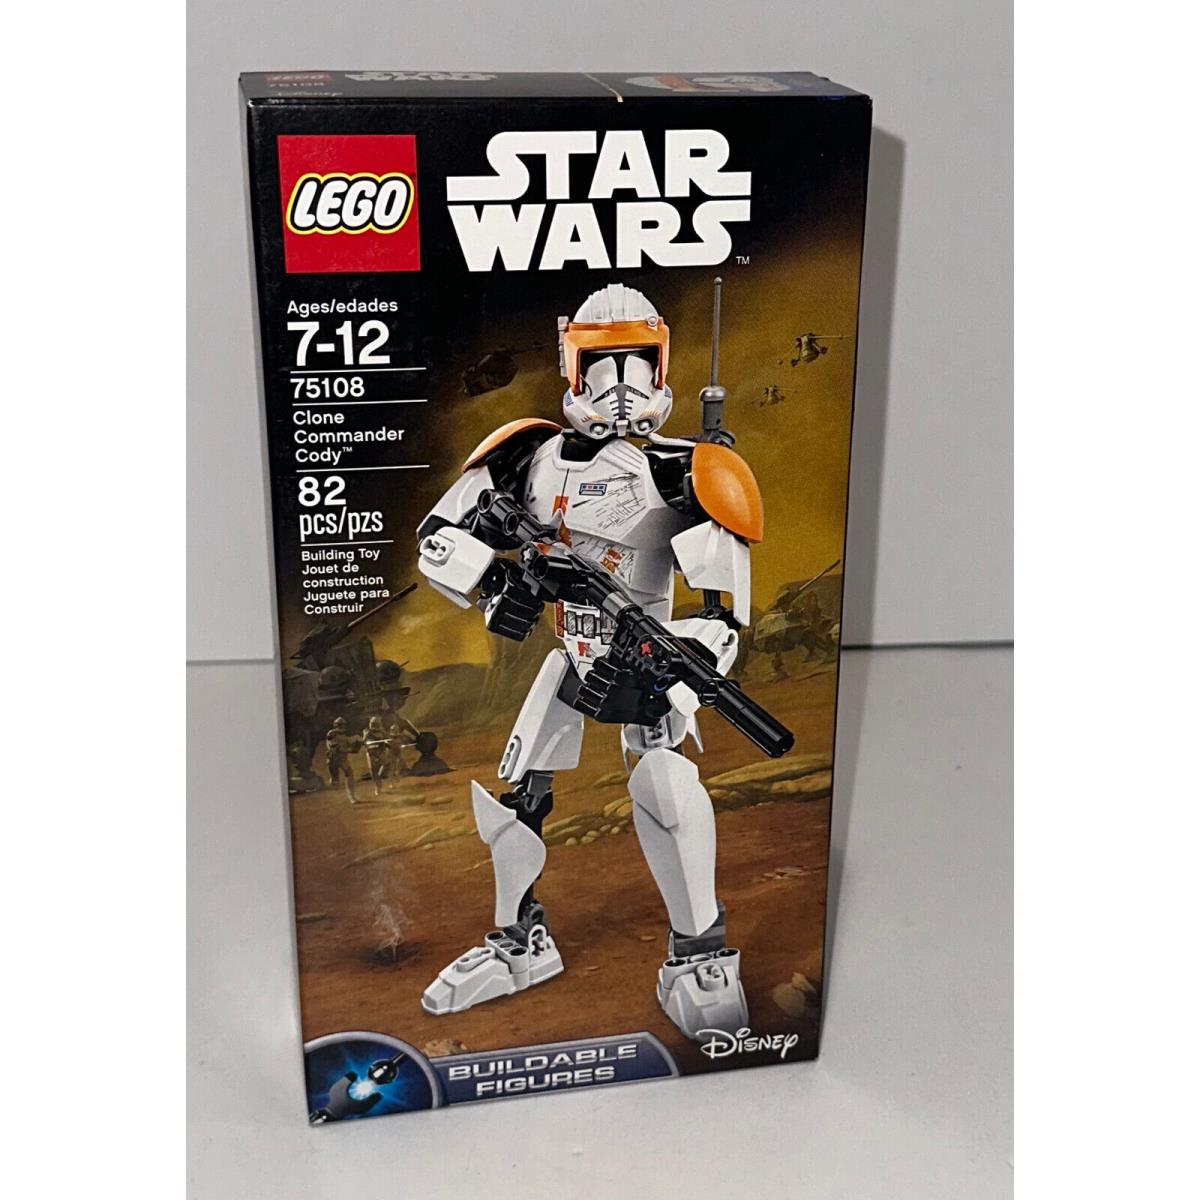 Lego Star Wars Commander Cody 75108 Retired